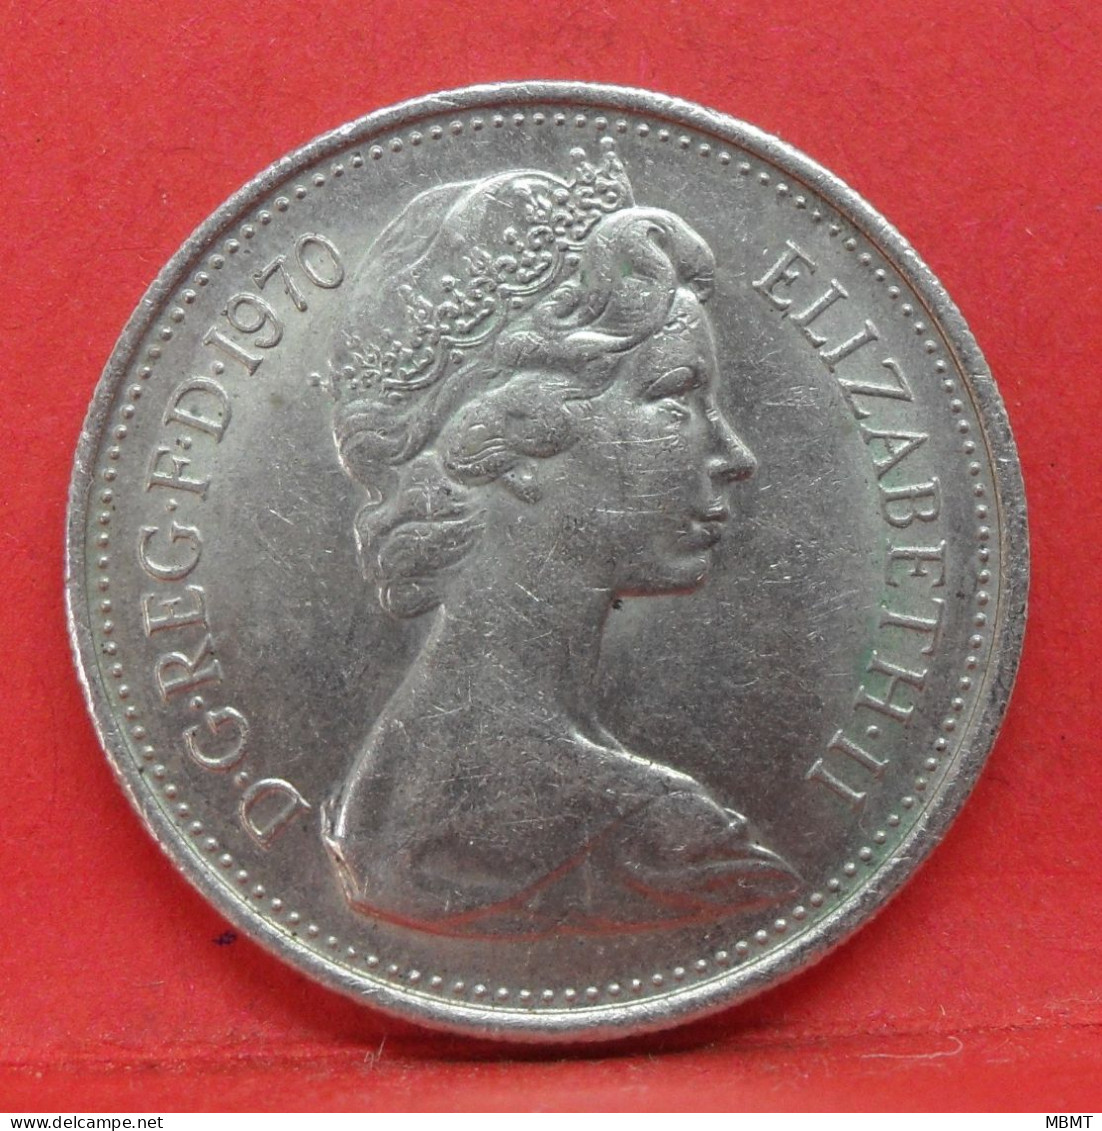 5 Pence 1970 - SUP - Pièce Monnaie Grande-Bretagne - Article N°2765 - 5 Pence & 5 New Pence